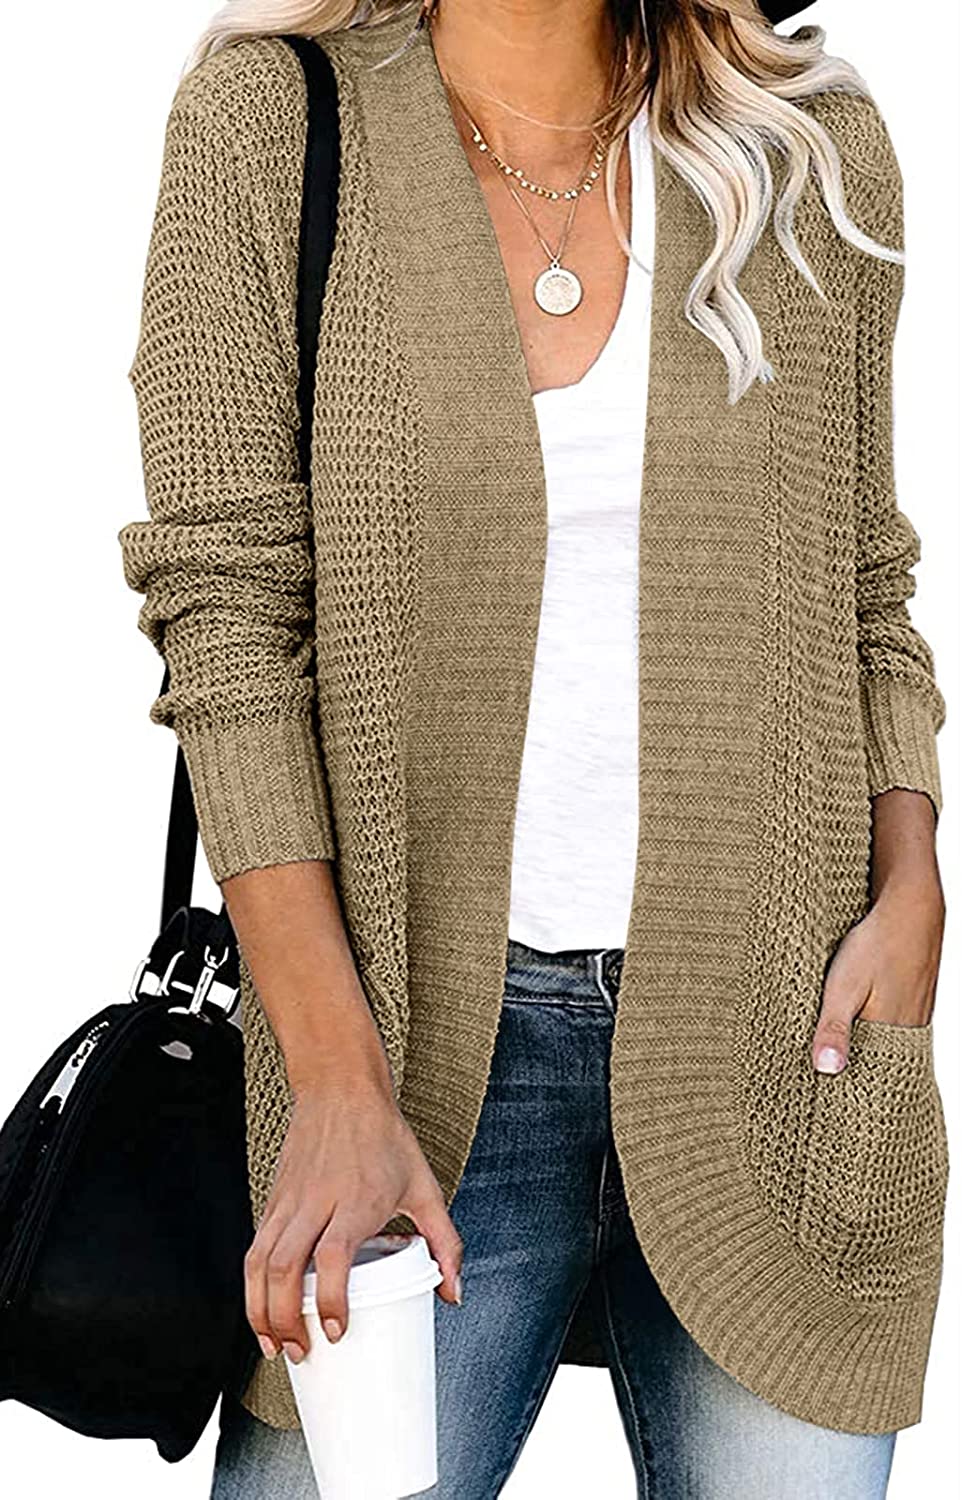 ZESICA Women's Long Sleeve Open Front Casual Lightweight Soft Knit Cardigan Sweater Outerwear